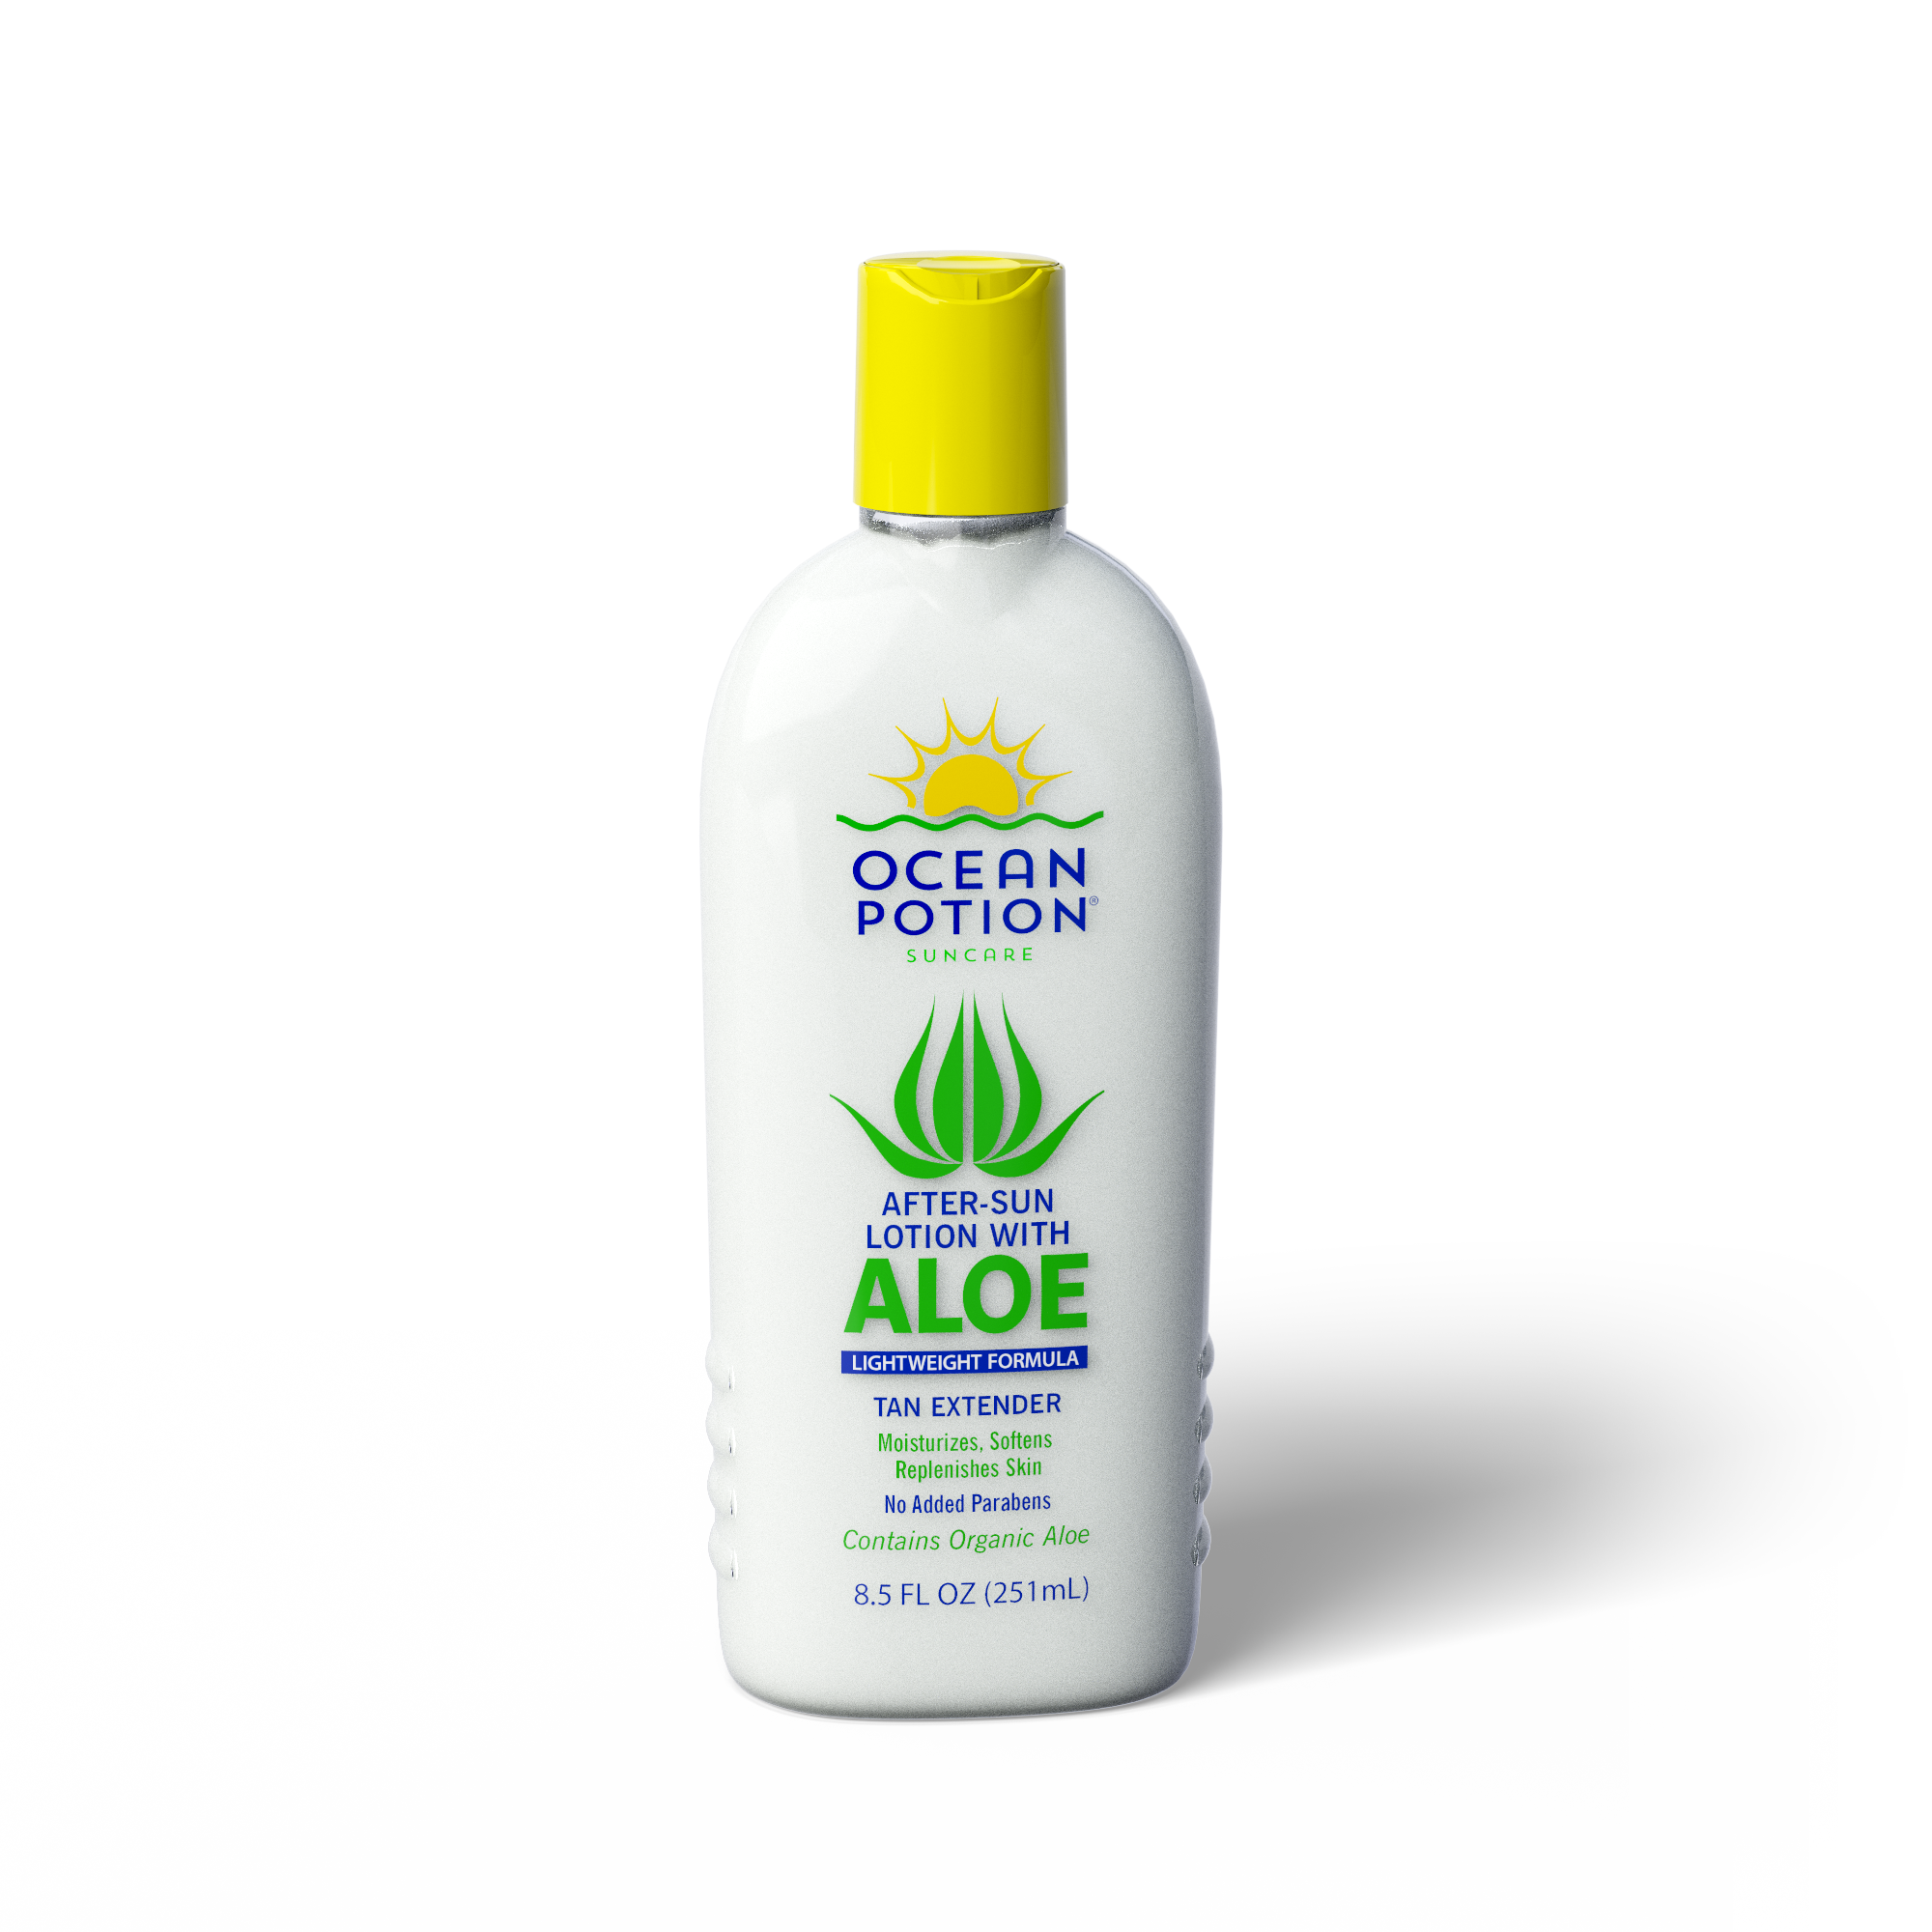 After-Sun Lotion + Aloe